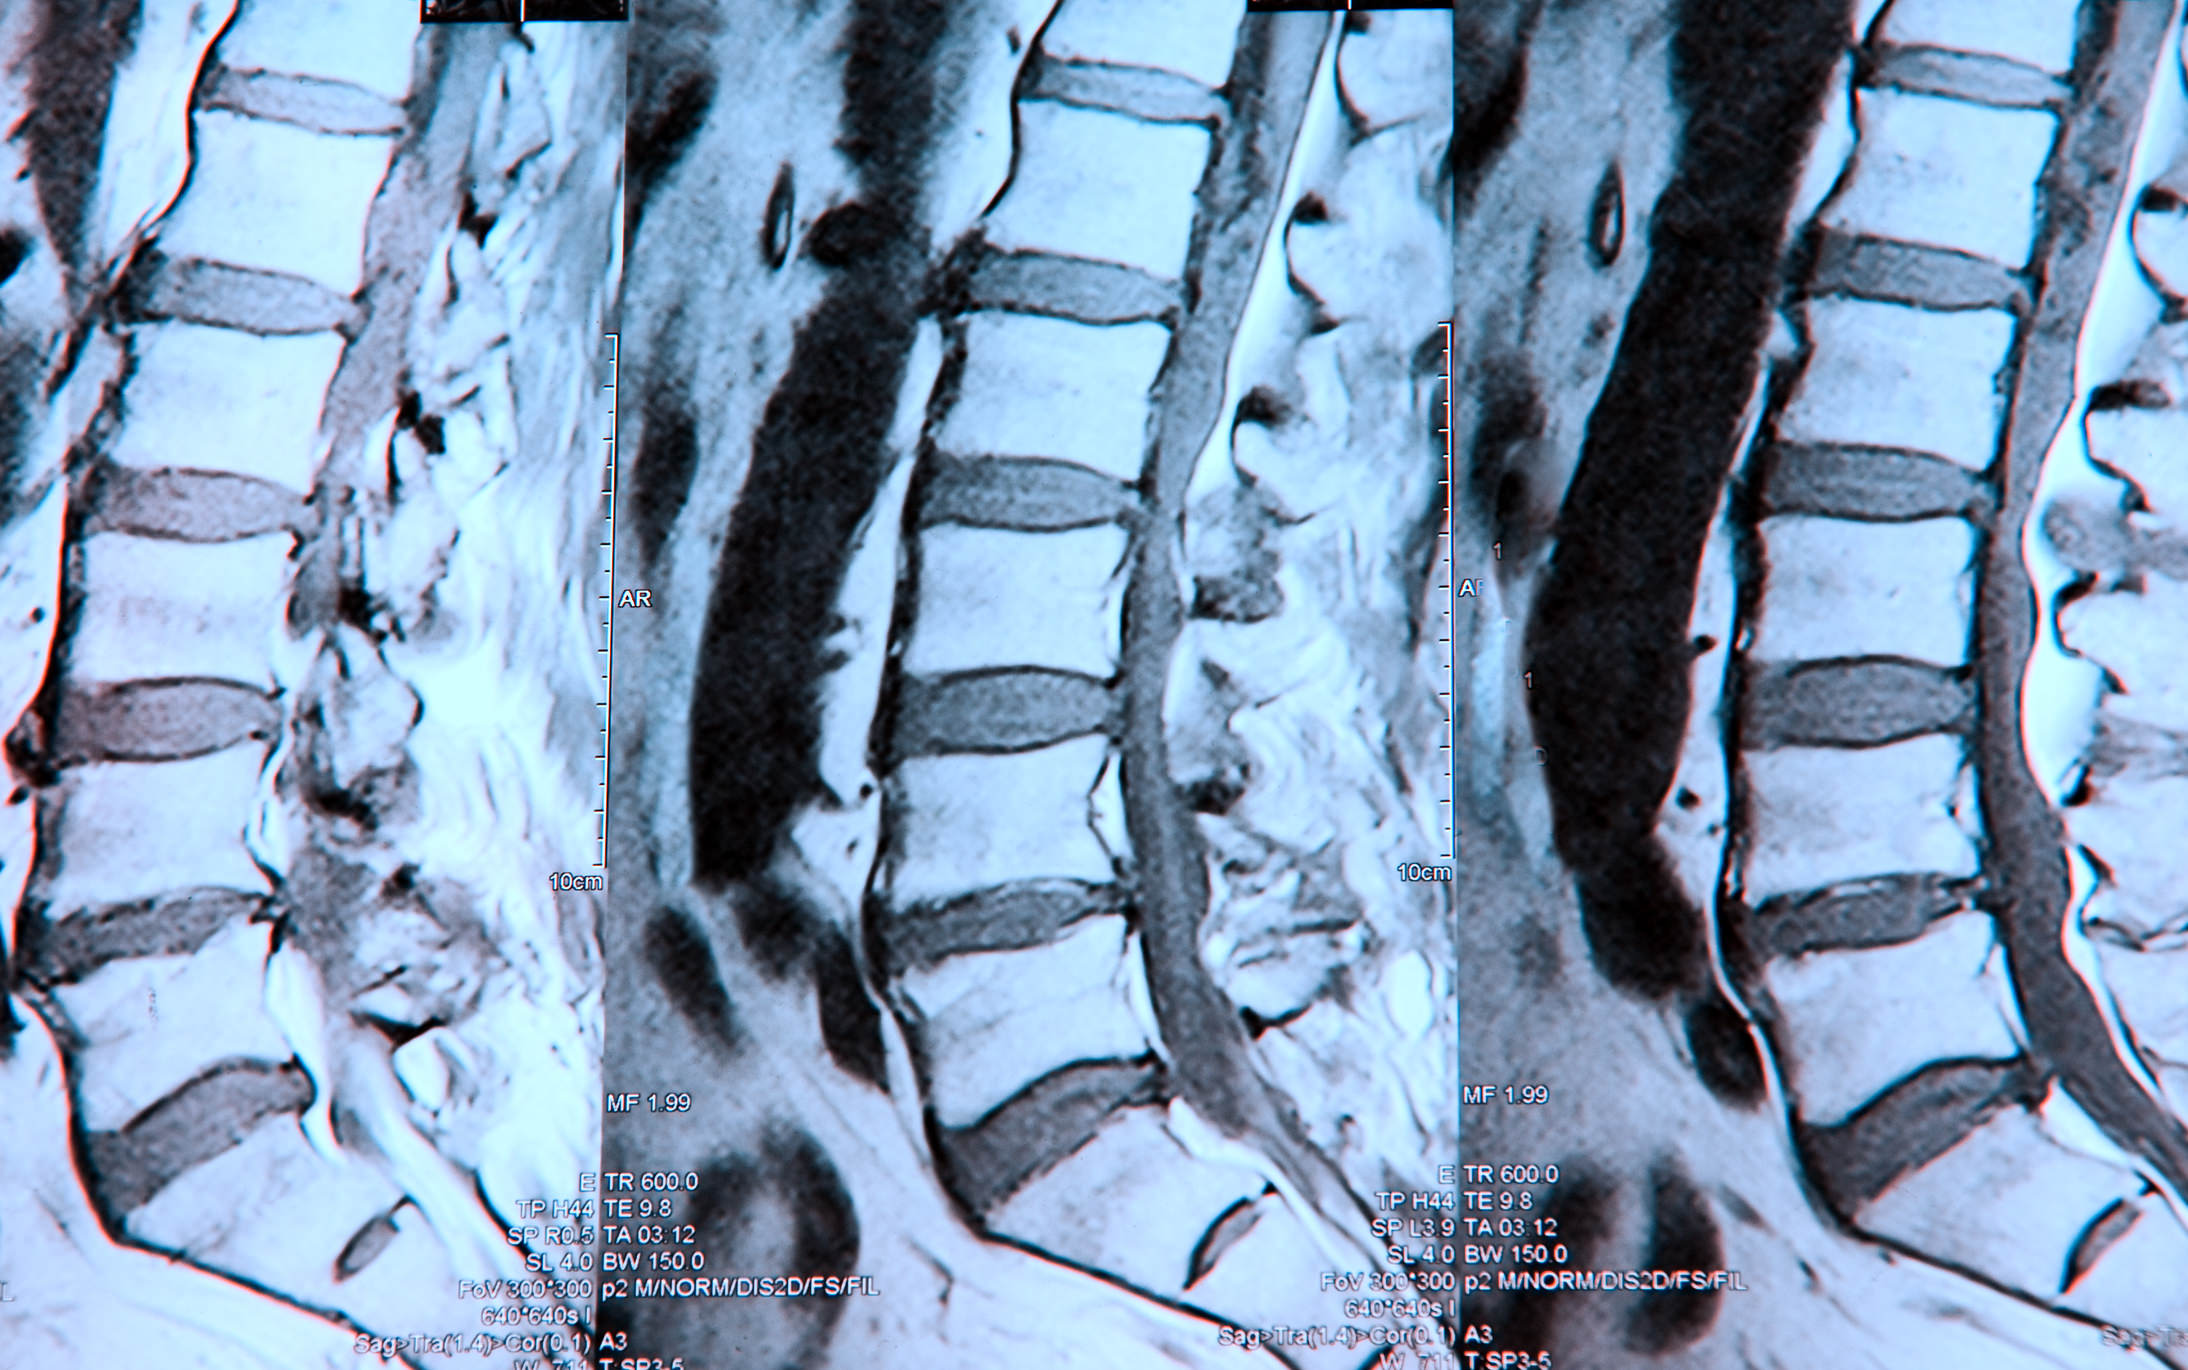 Treatments Spinal Cord Stimulation by Santa Ana Pain Clinic 2 1 - Spinal Cord Stimulation